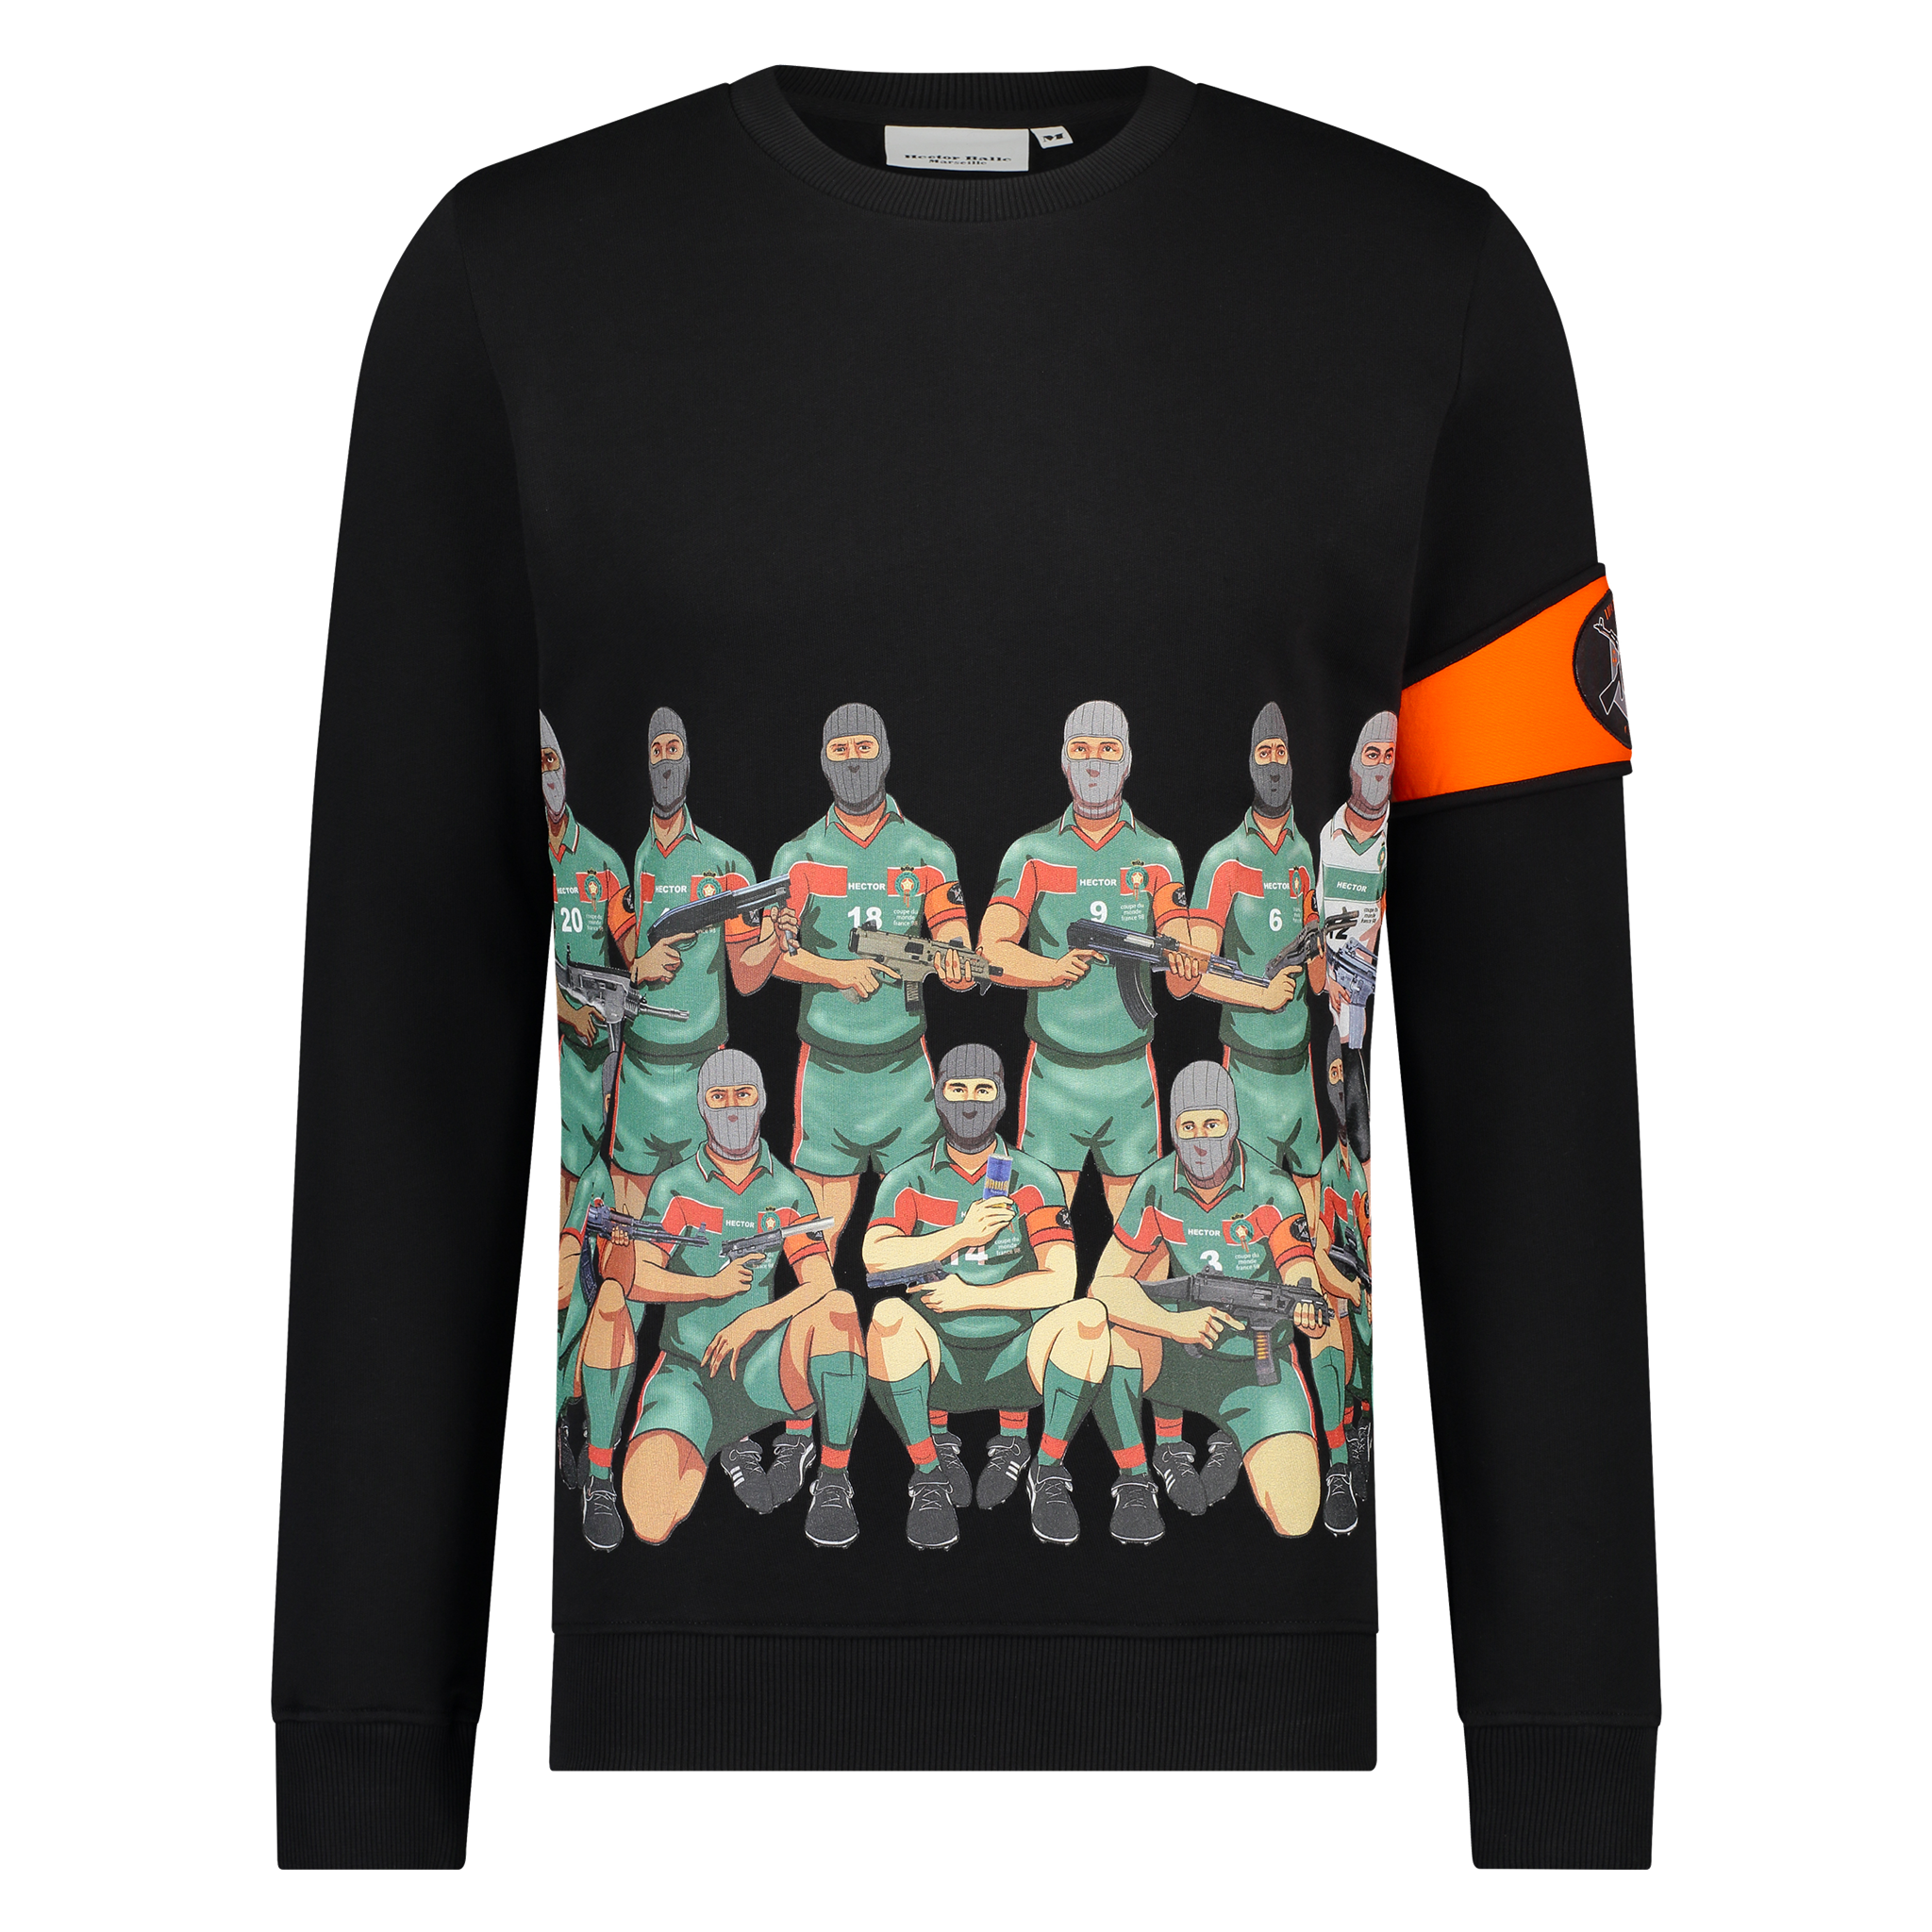 Hector Balle sweater van ARTURO Fashion